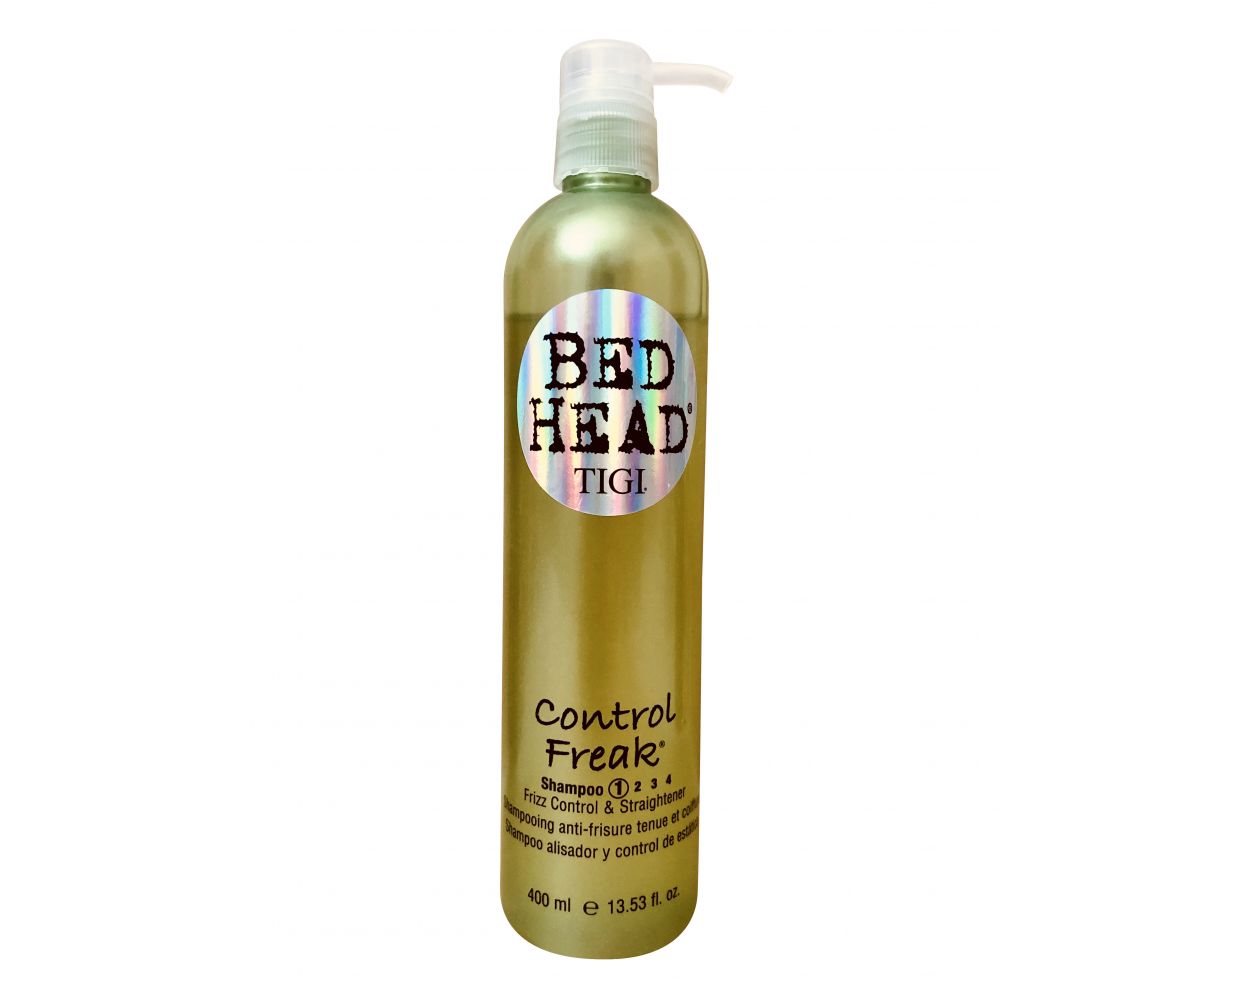 TIGI Head Freak 1 Frizz Control & Straightener | Shampoo Beautyvice.com